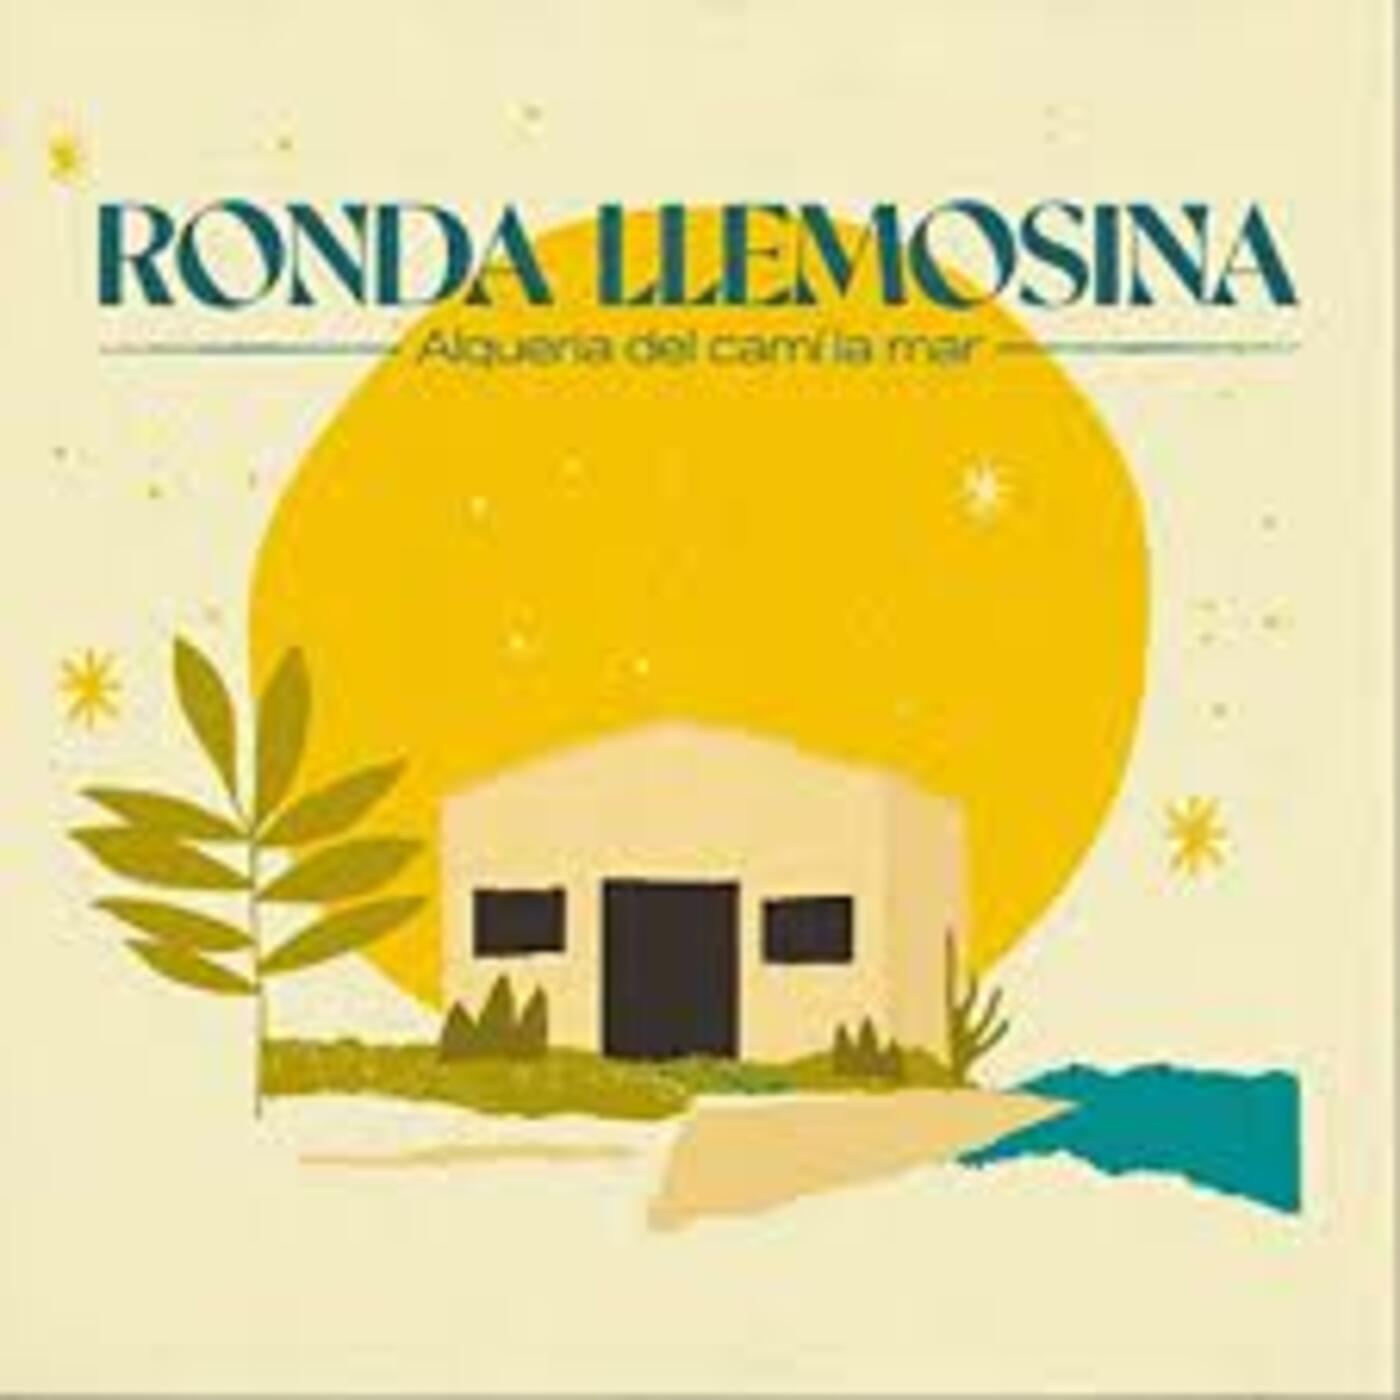 Ronda Llemosina - Alqueria del camí la mar | musica en valencià